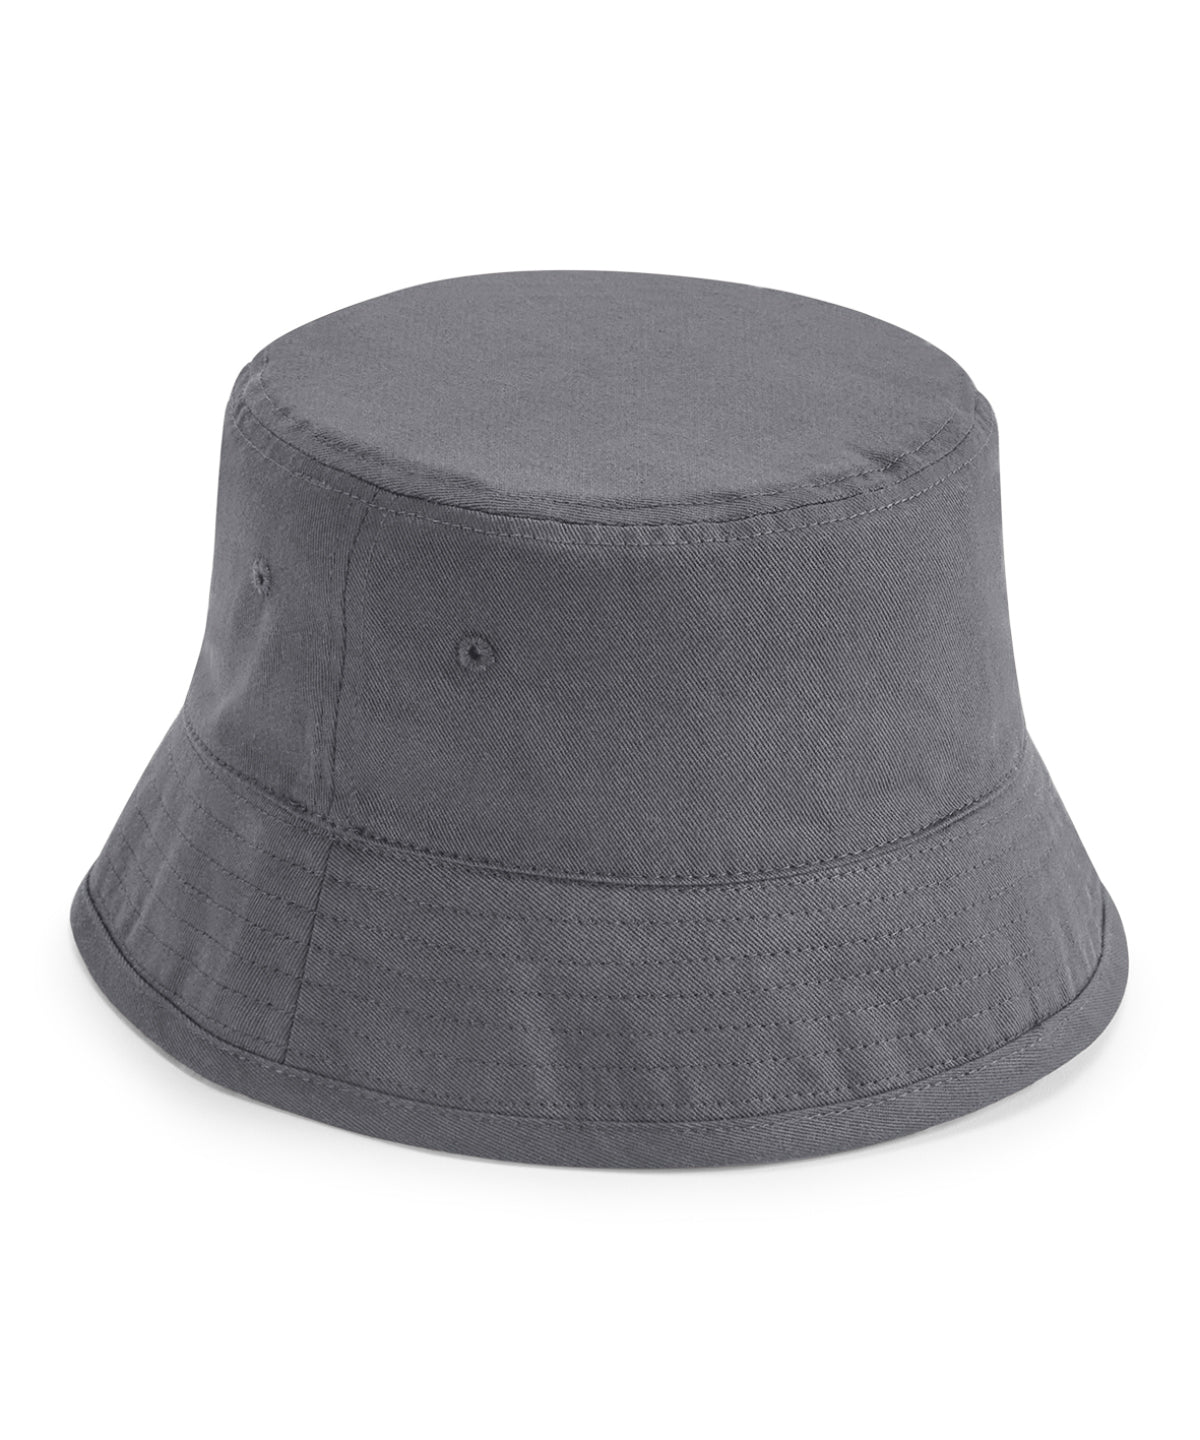 Personalised Hats - Black Beechfield Organic cotton bucket hat